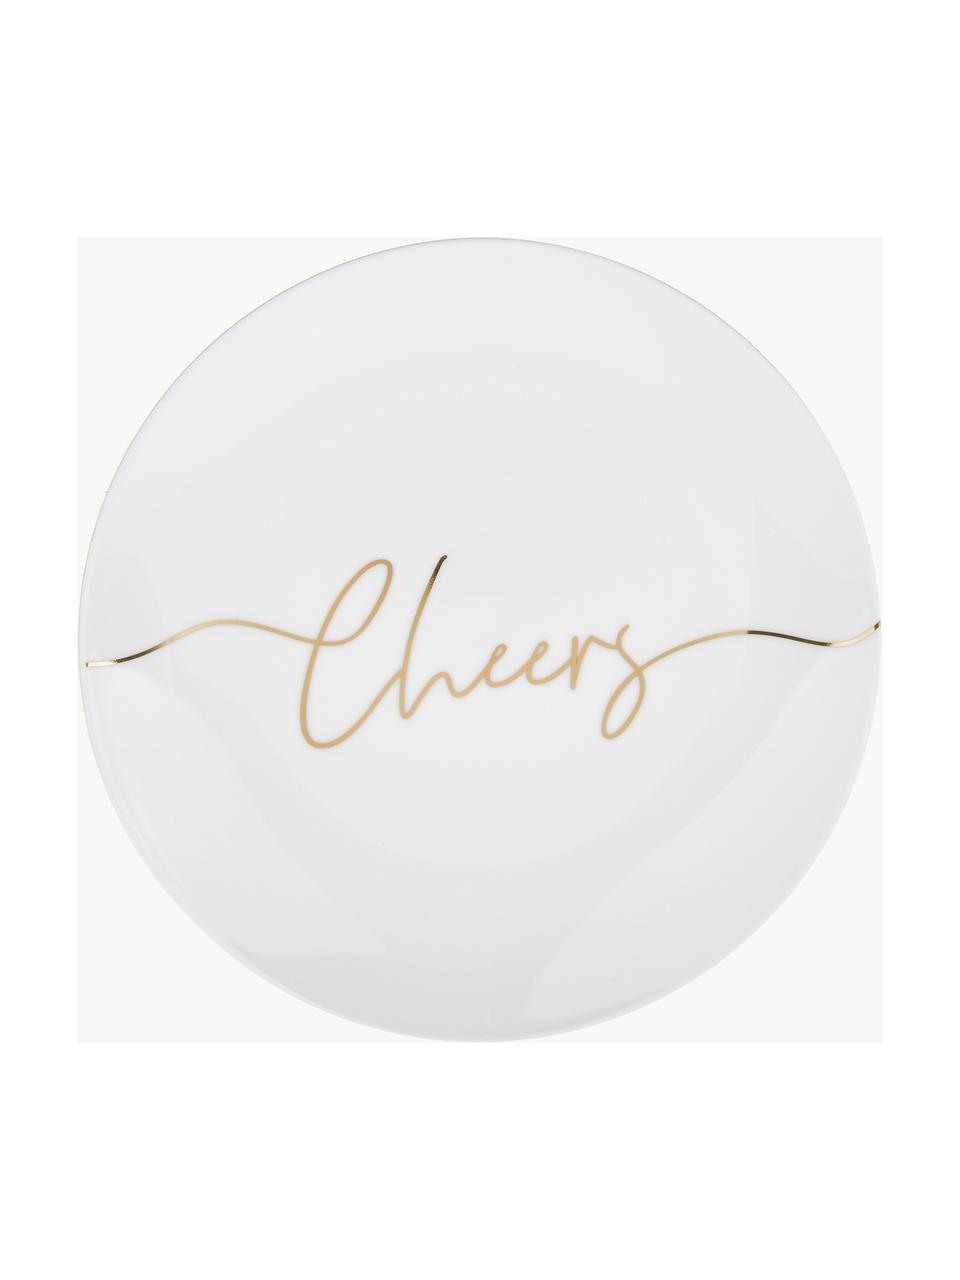 Sada porcelánových snídaňových talířů Cheers, 4 díly, Porcelán, Bílá, zlatá, Ø 21 cm